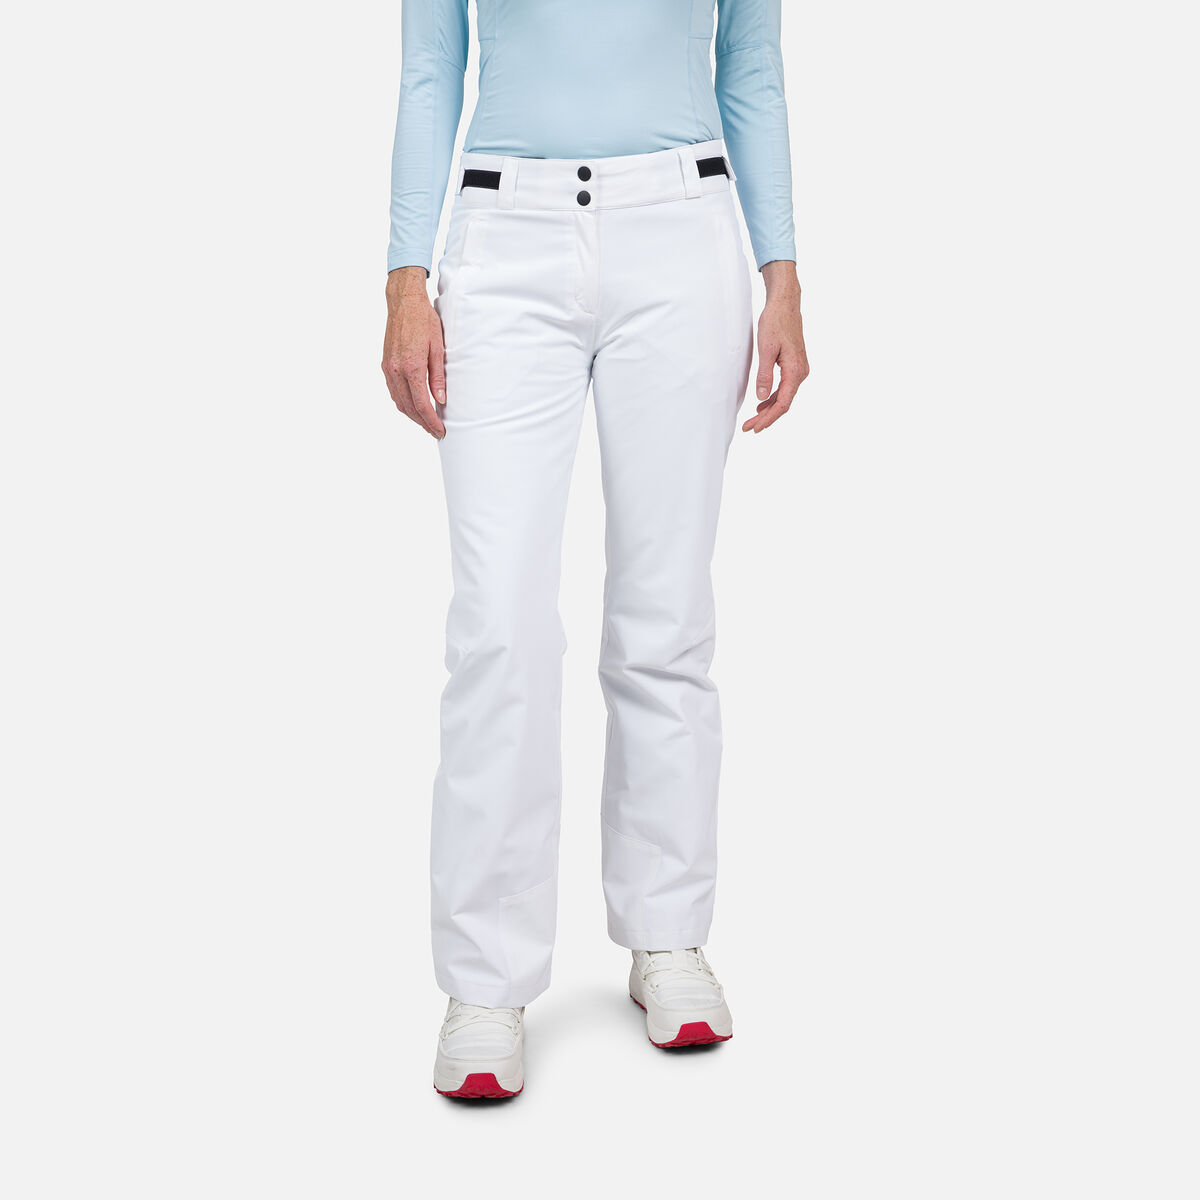 Women's Staci Ski Pants | Ski trousers | Rossignol